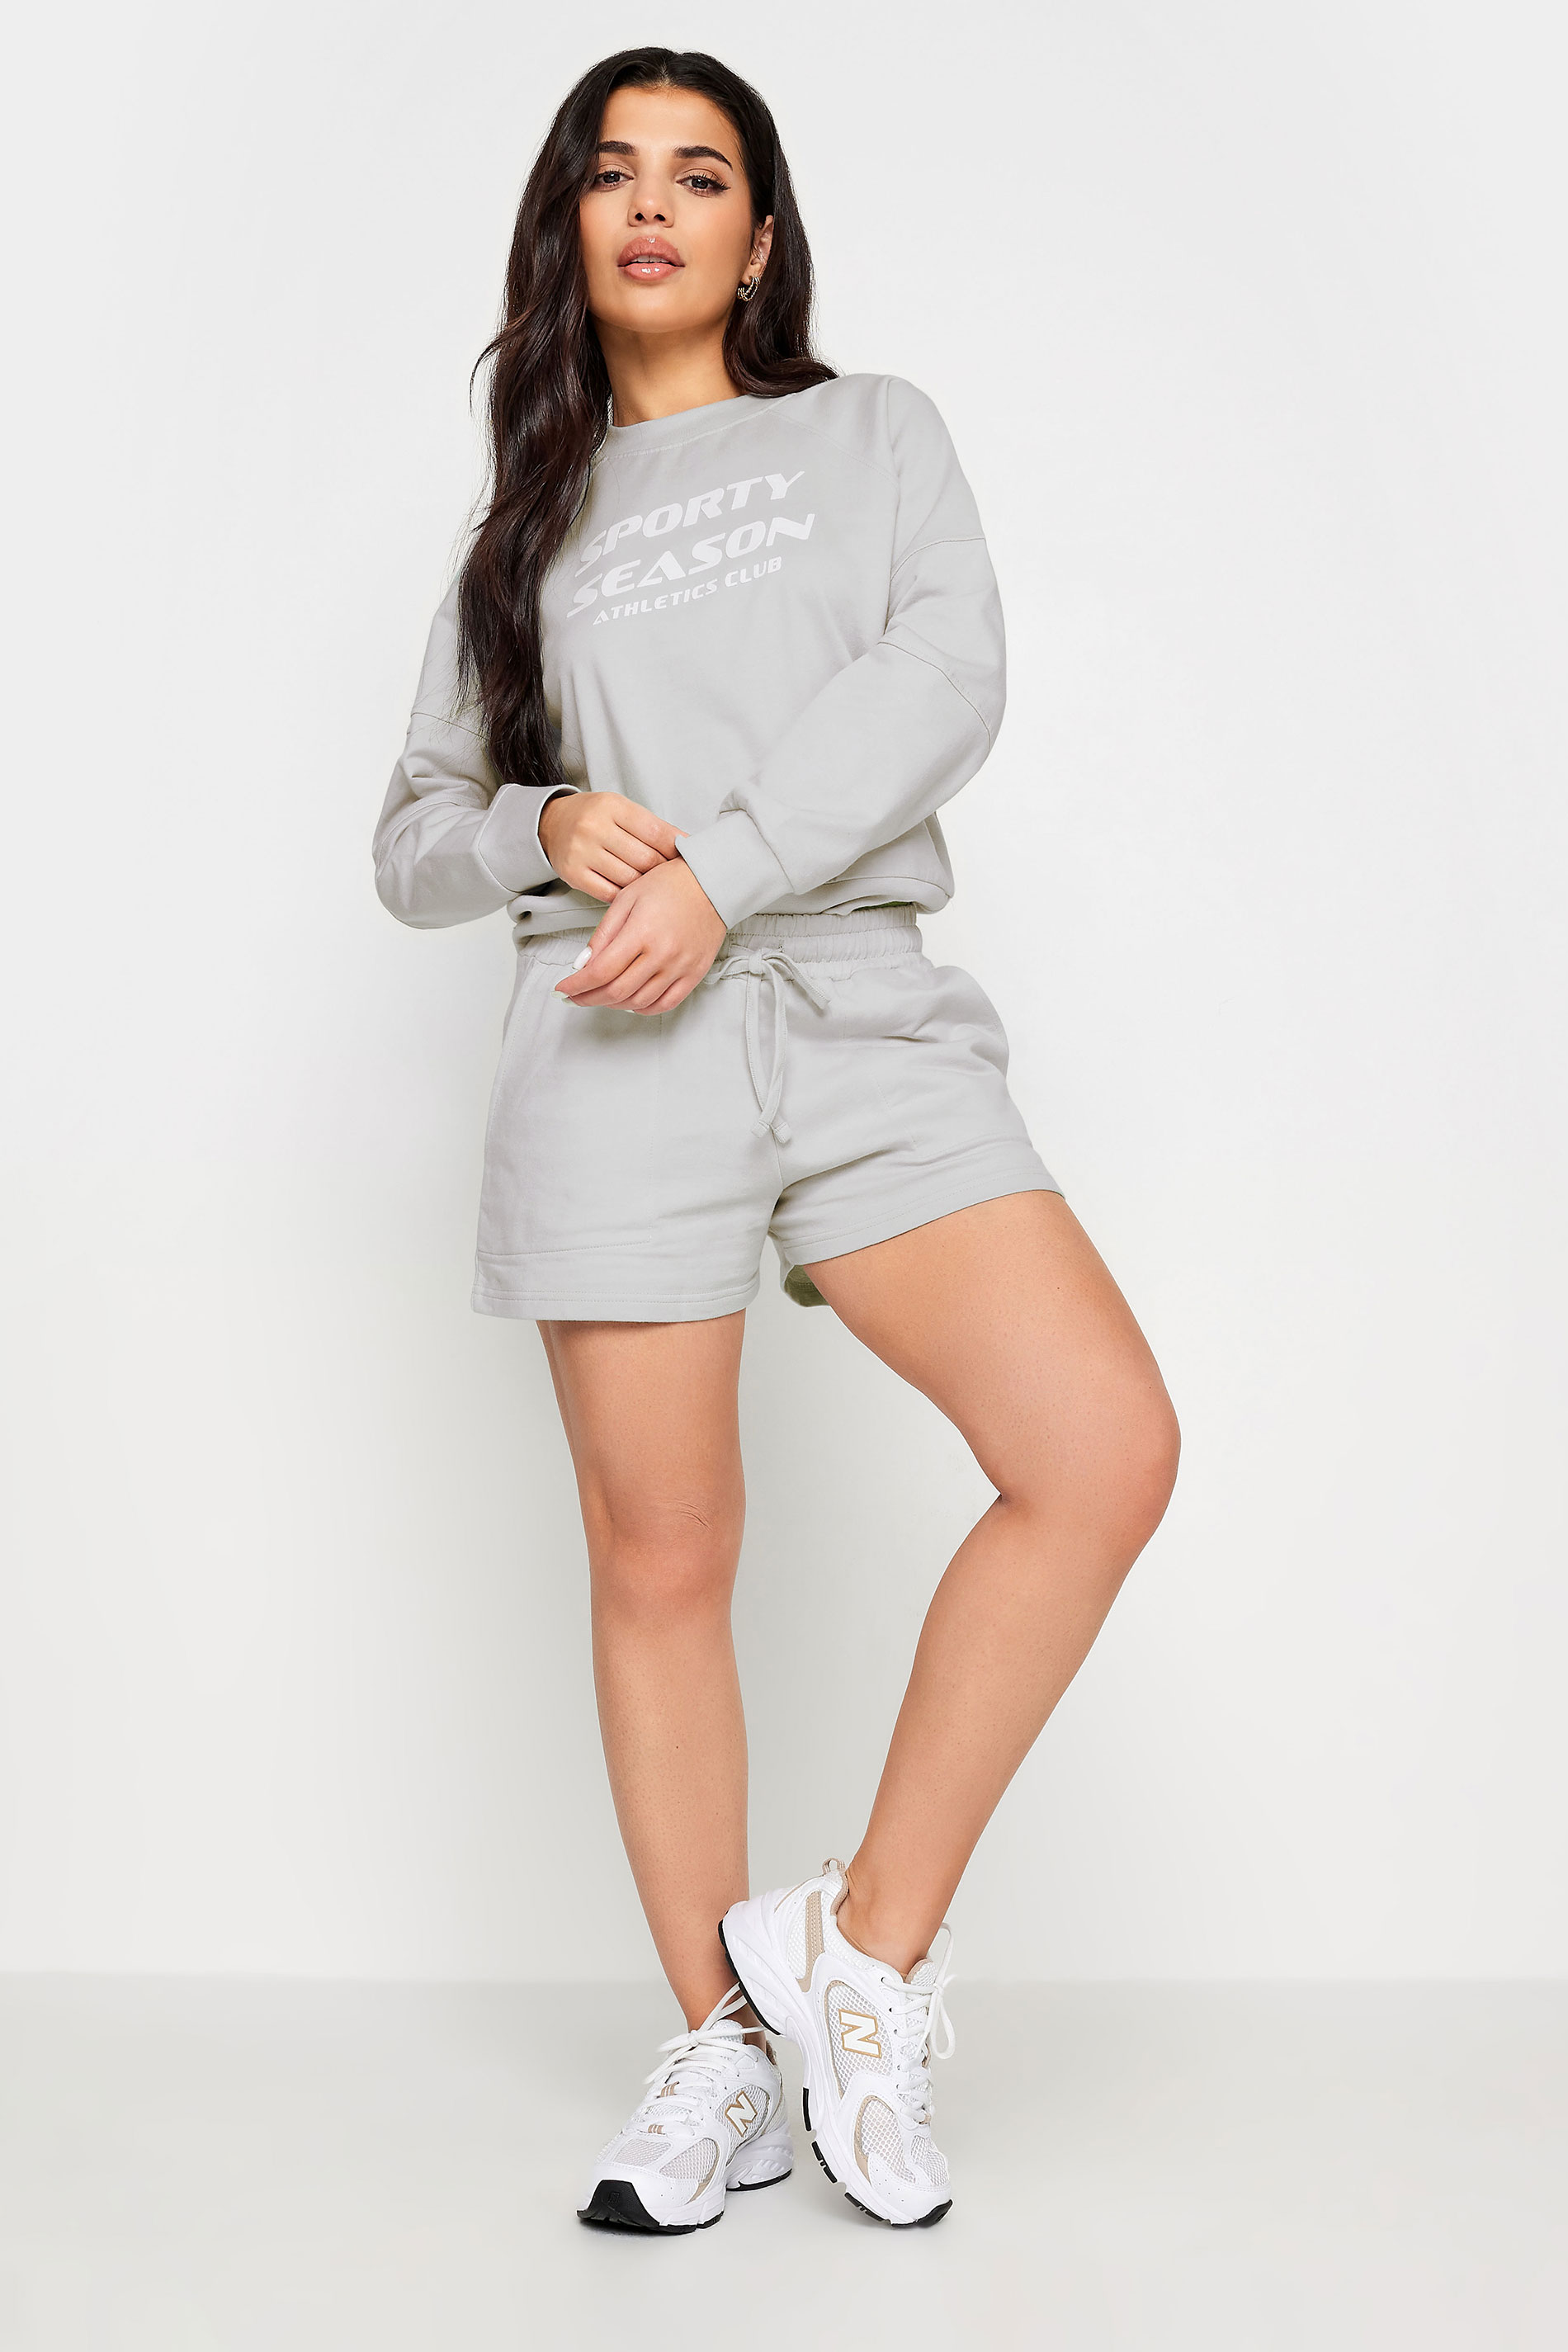 PixieGirl Petite Womens Light Grey Jogger Shorts | PixieGirl 3